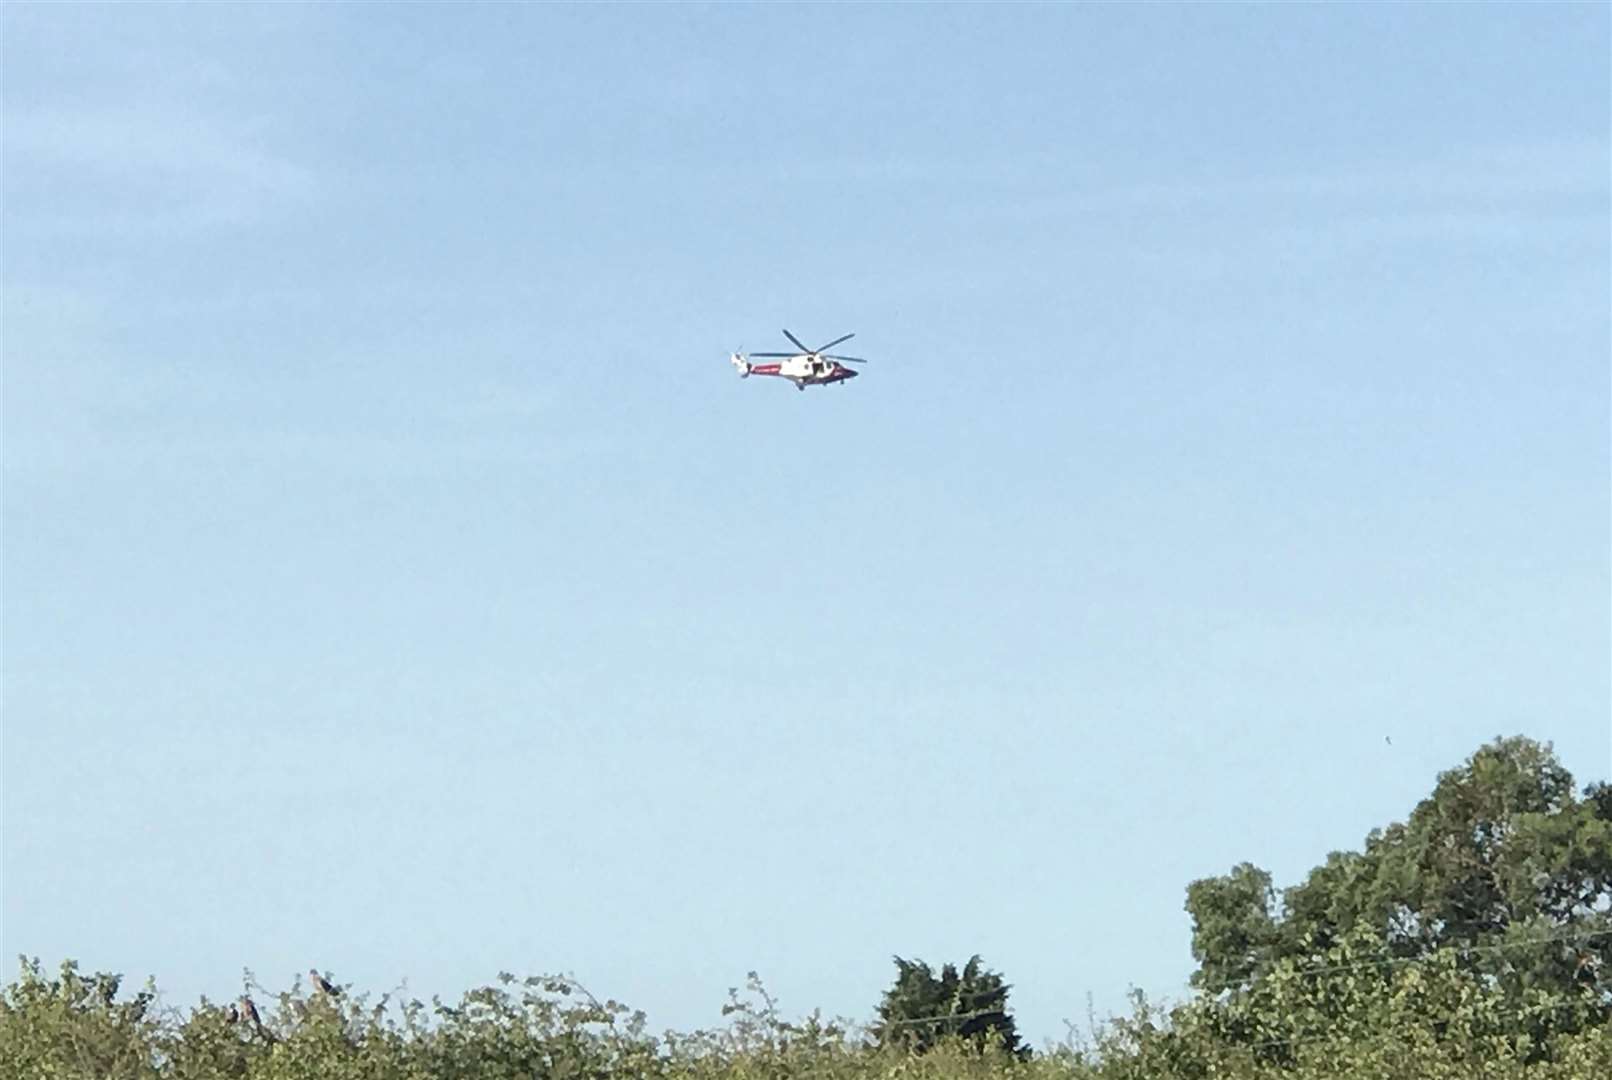 Coastguard helicopter spotted over Minster